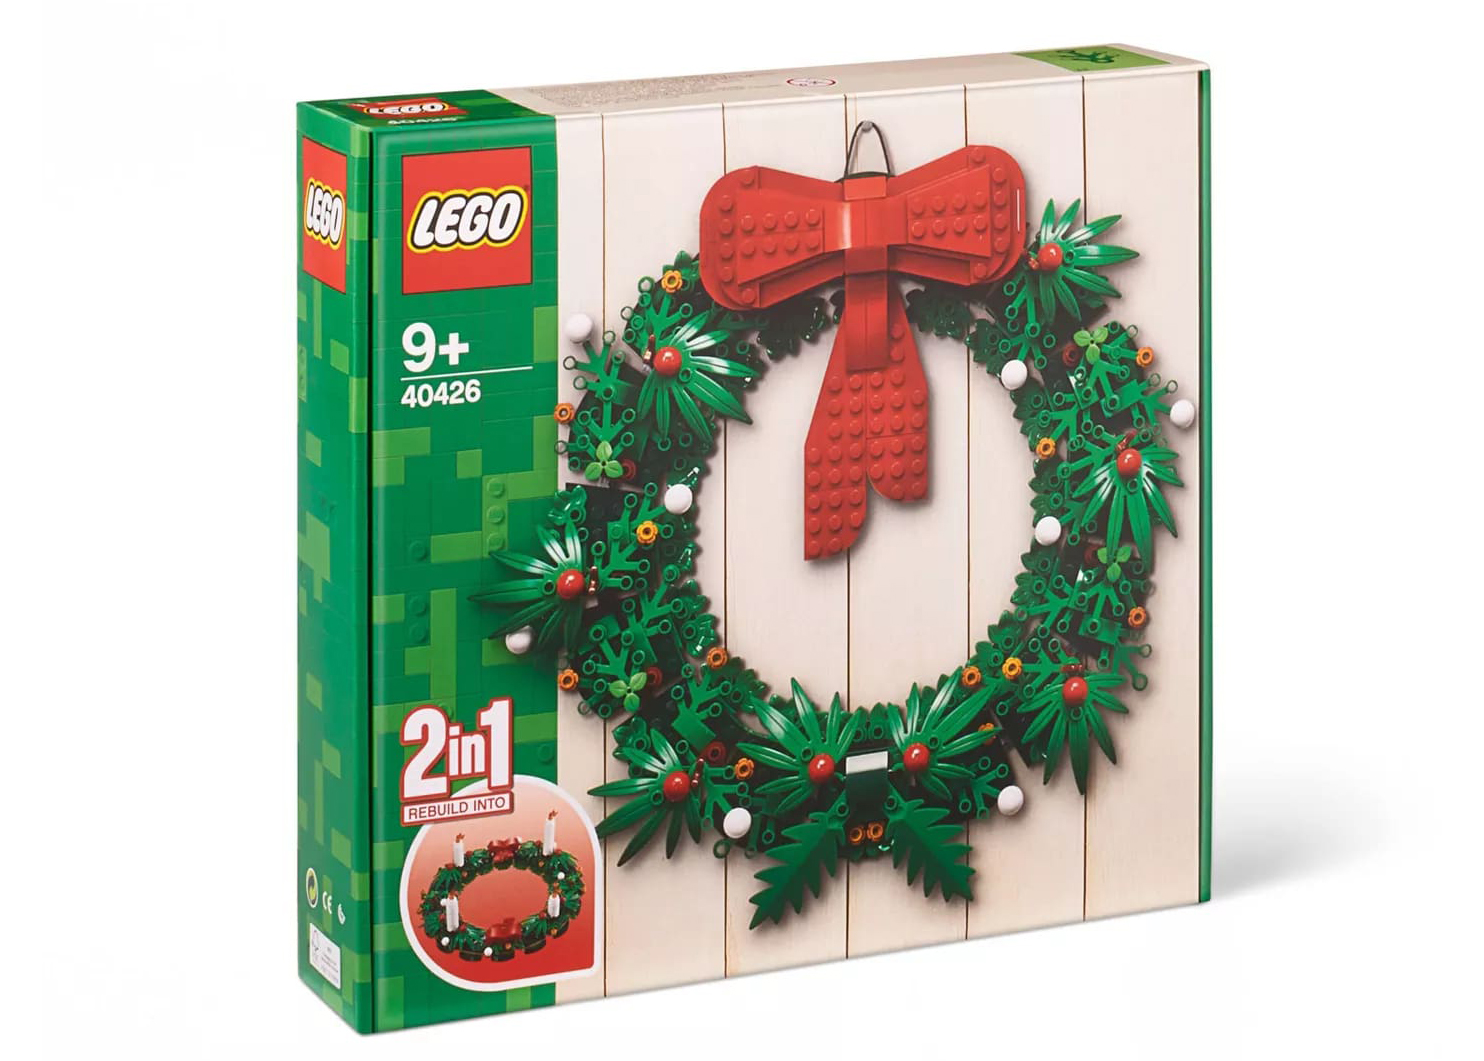 LEGO Christmas Wreath 2 in 1 Target Exclusive Set 40426 - FW21 - US